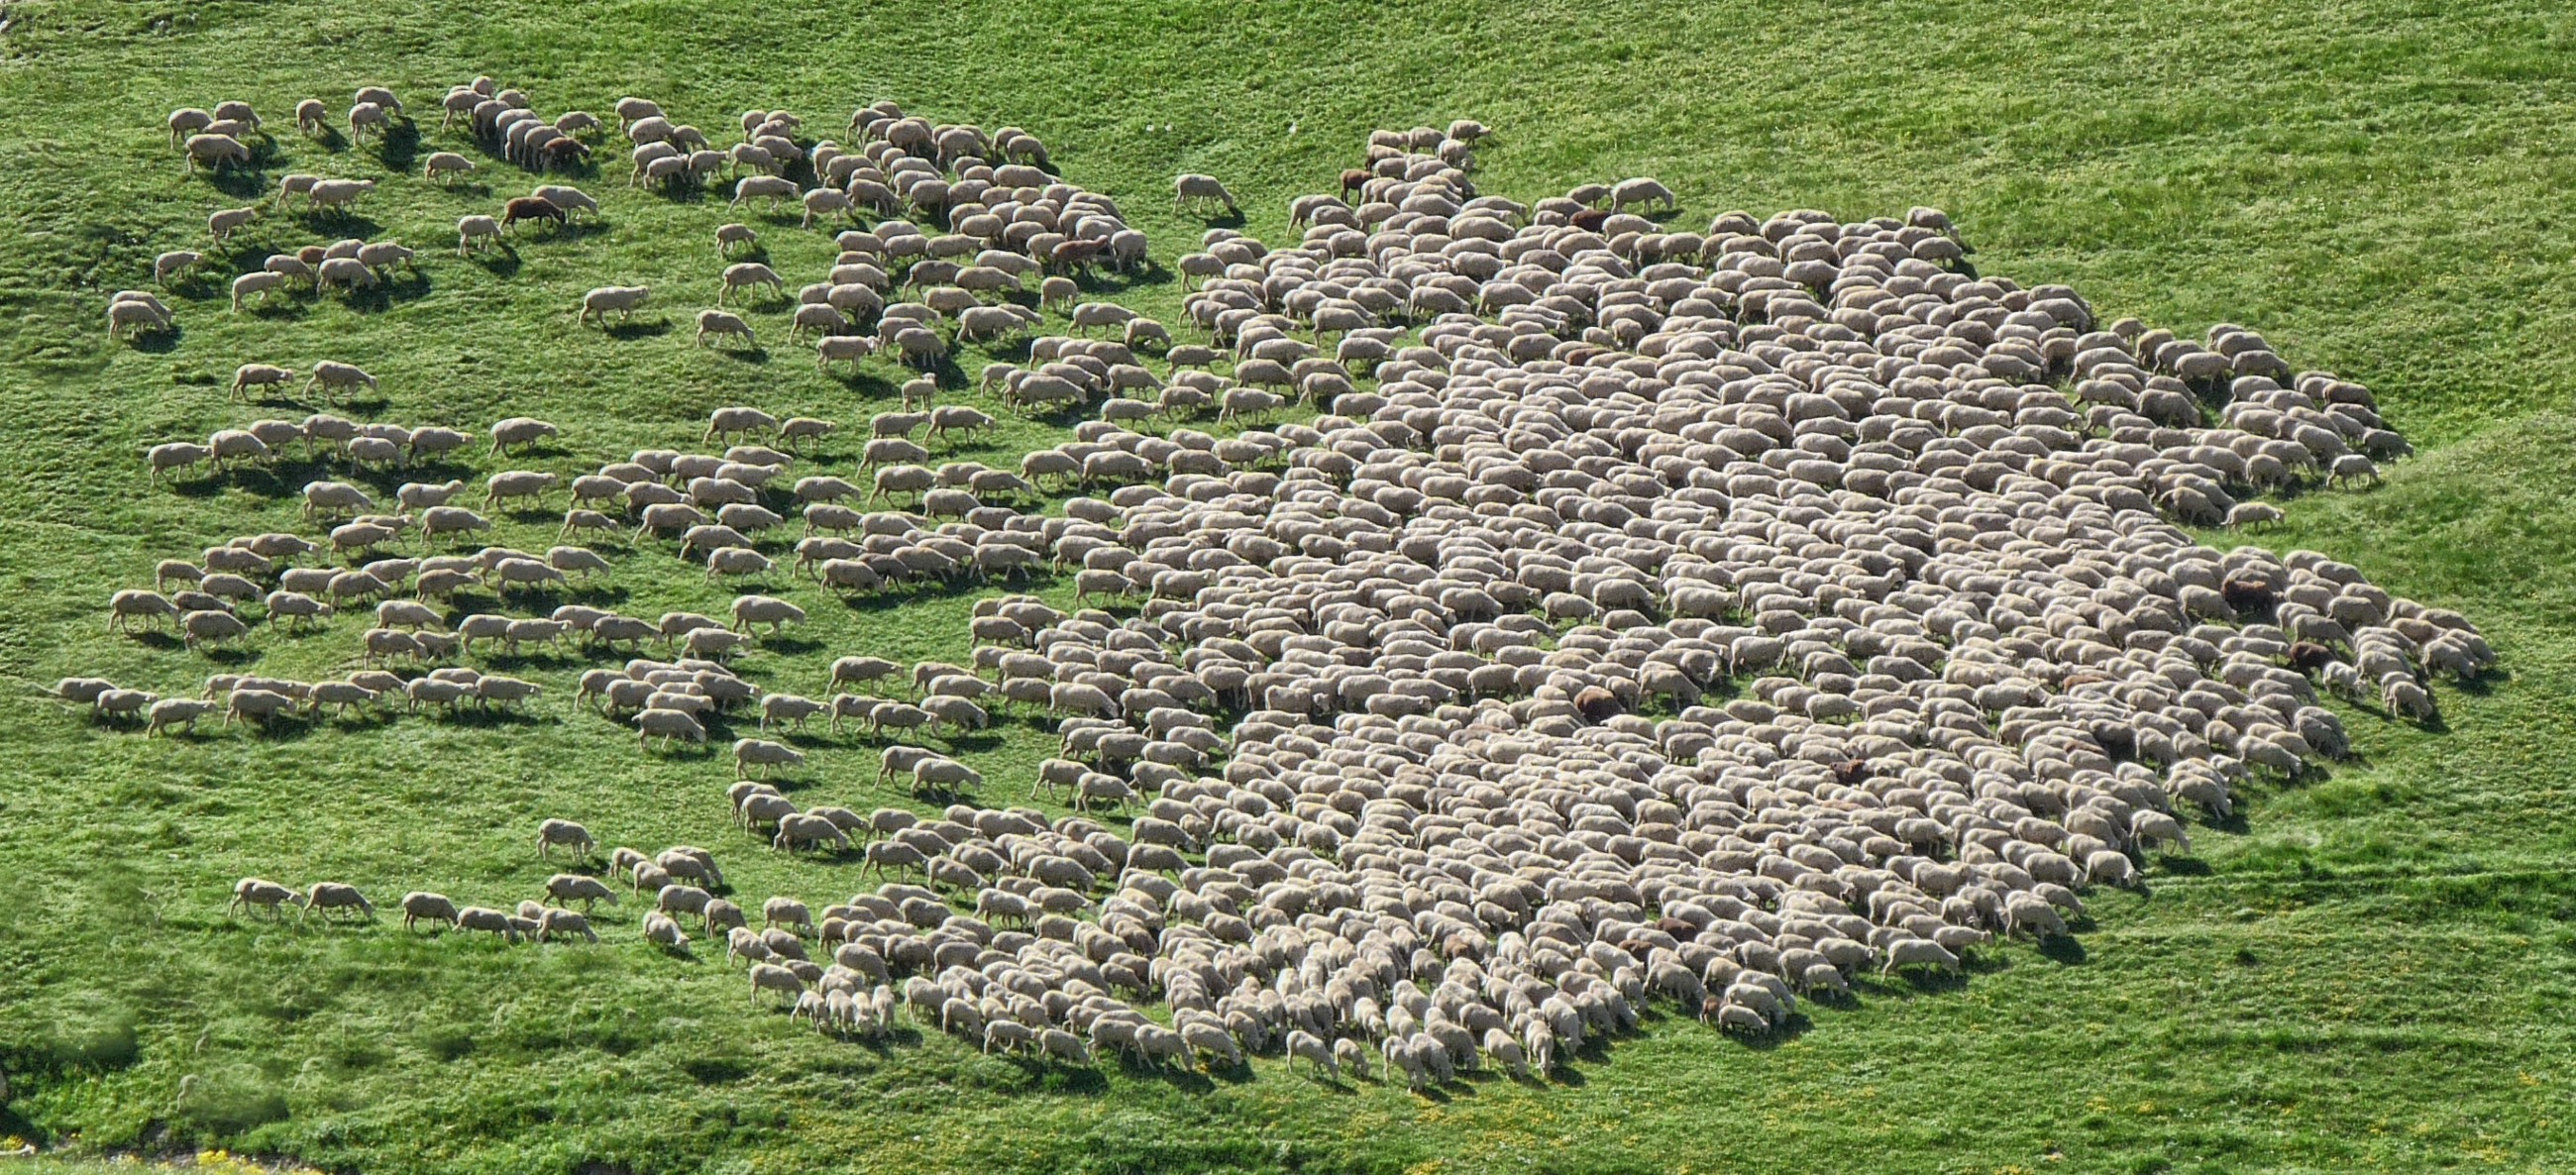 Овца вид сверху